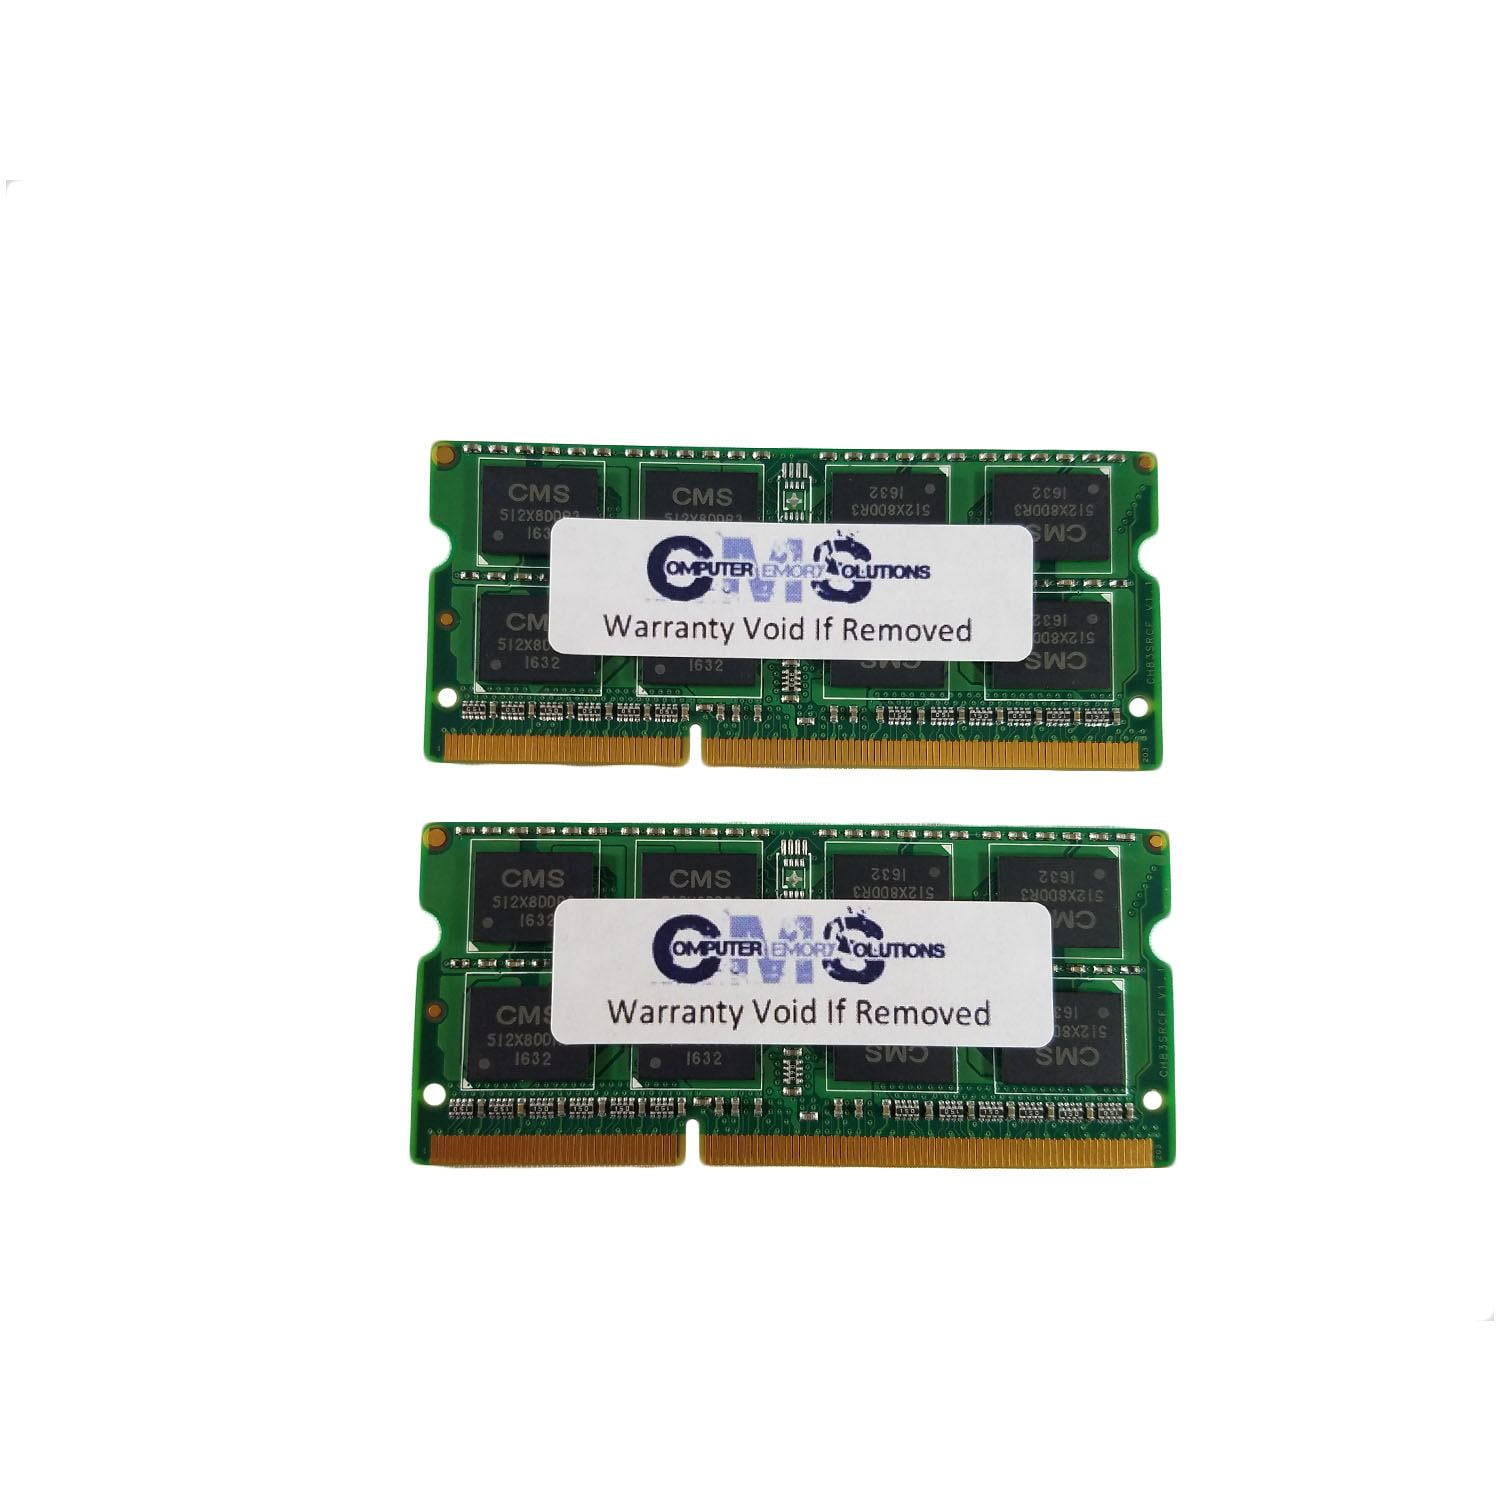 DDR3 1600MHz SODIMM PC3-12800 204-Pin Non-ECC Memory Upgrade Kit RAM for Alienware Alpha ASM100-7980 2 x 8GB A-Tech 16GB 